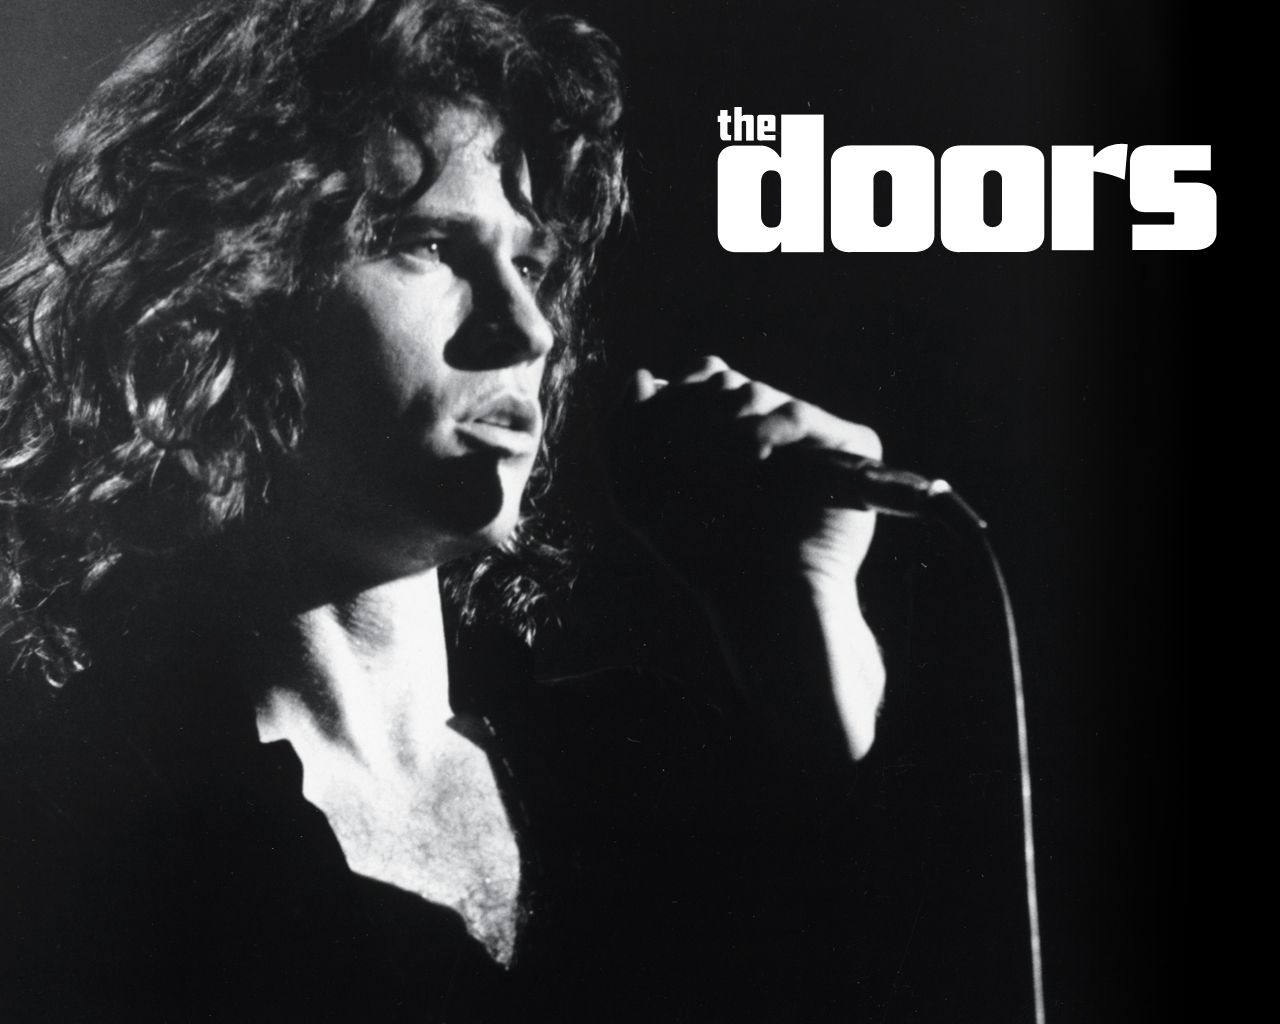 The Doors | Fondos de películas